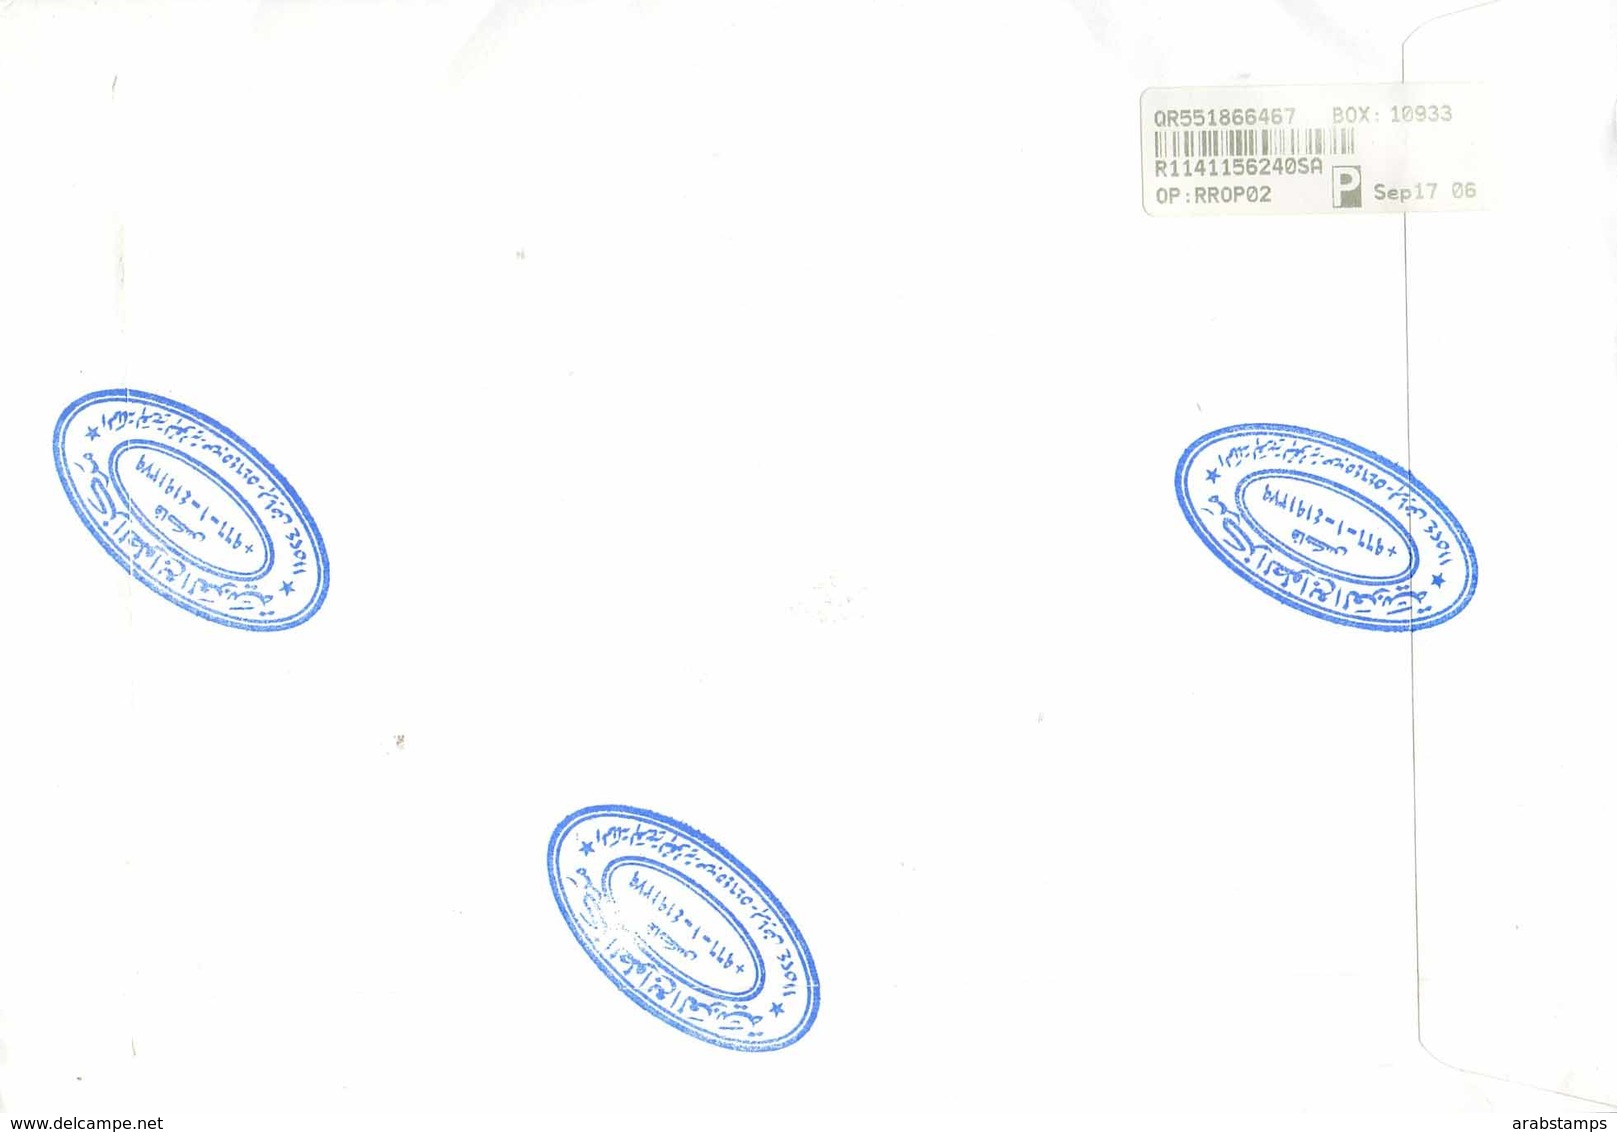 SAUDI ARABIA Registered Mail Cover Complete Set 3 Stamps + Souvenir Sheets Sent To Qatar - Saudi Arabia